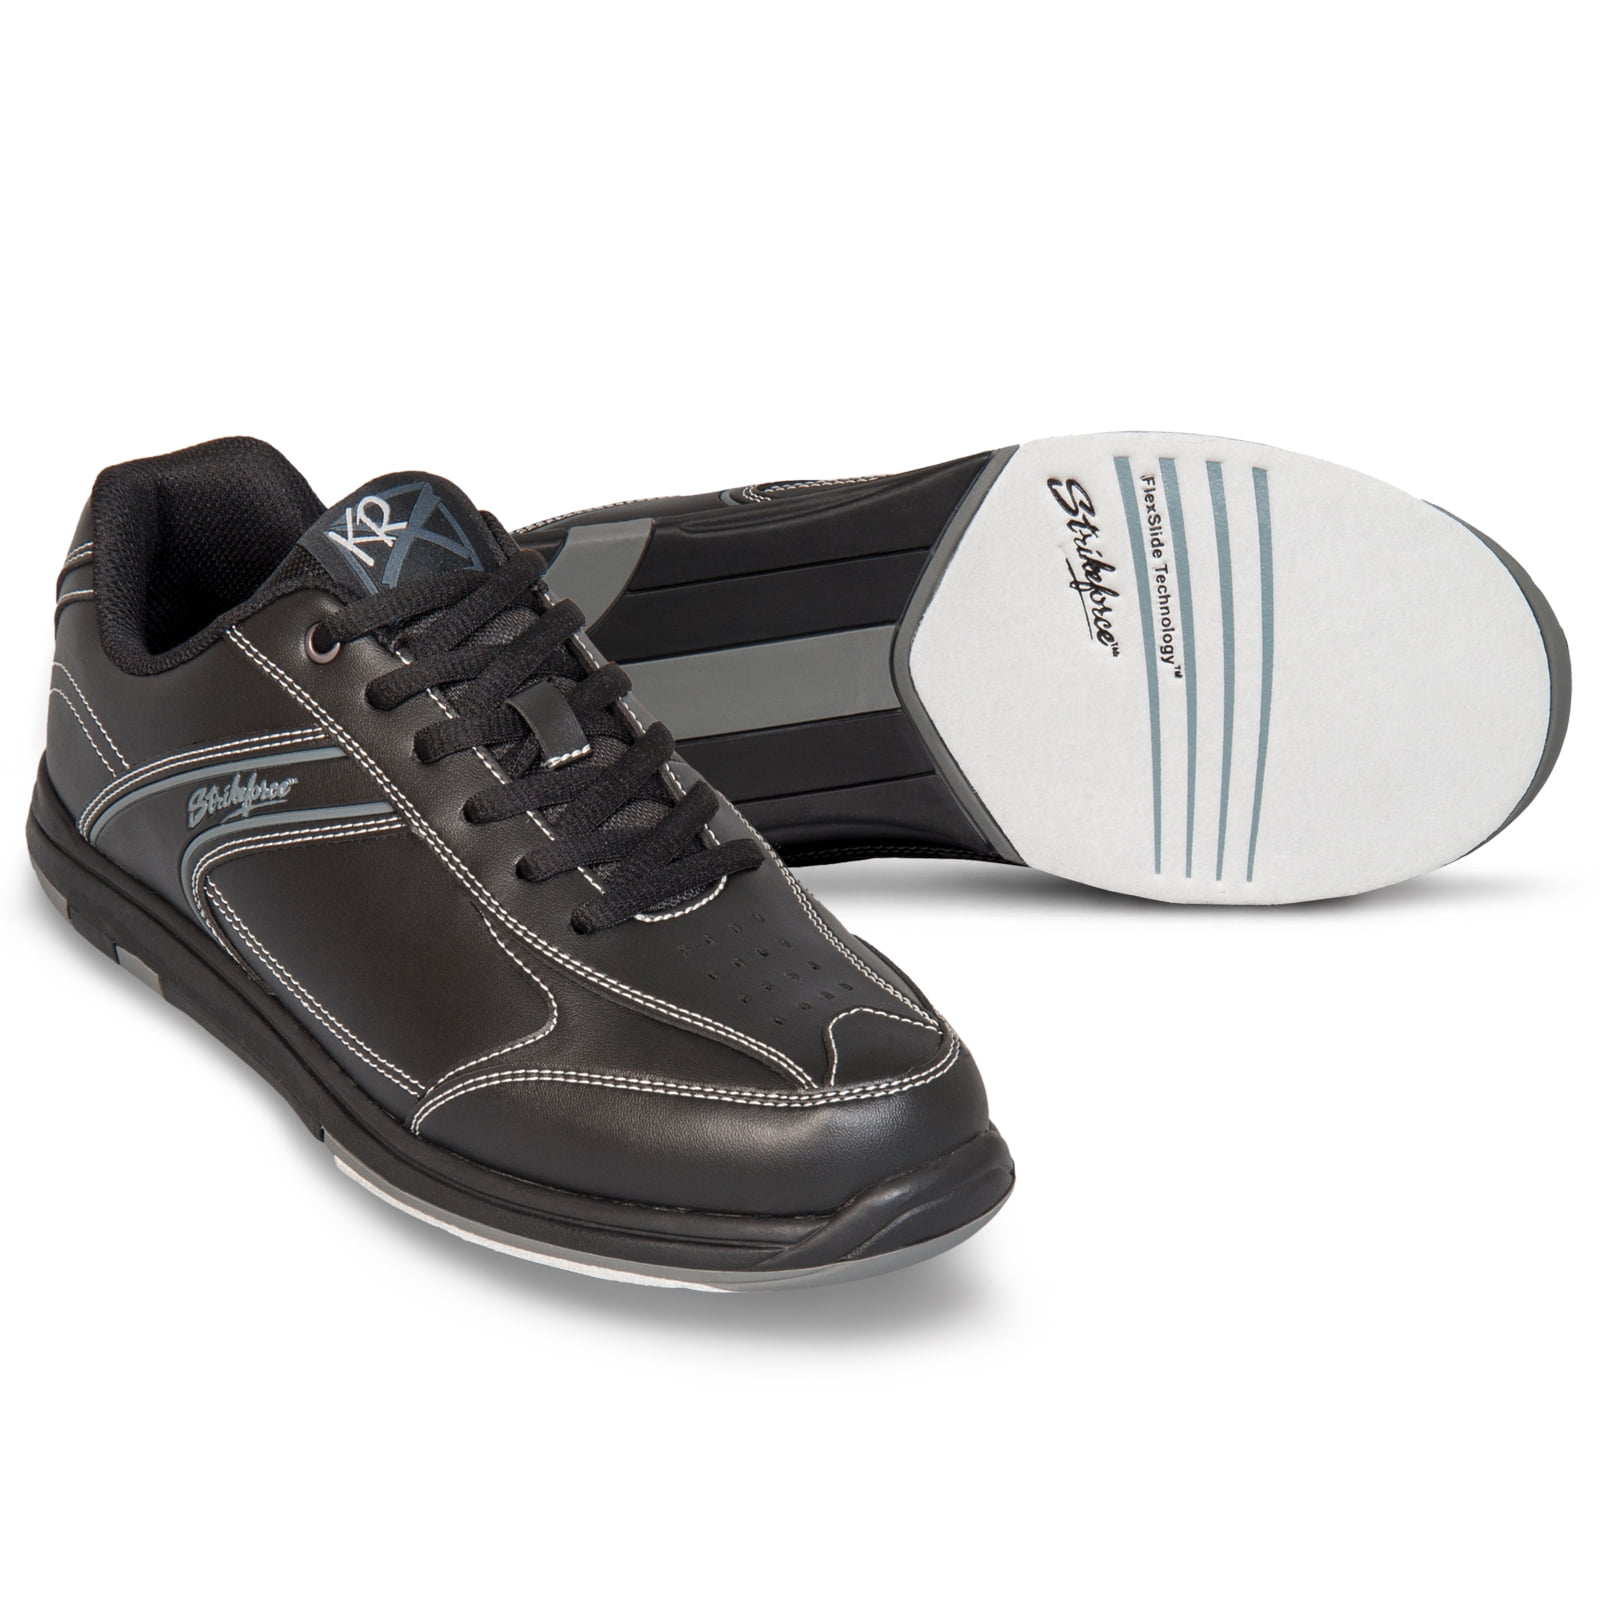 Details about   Men's Bowling Shoes KR Strikeforce Racer Lite Black Lime Very Light 